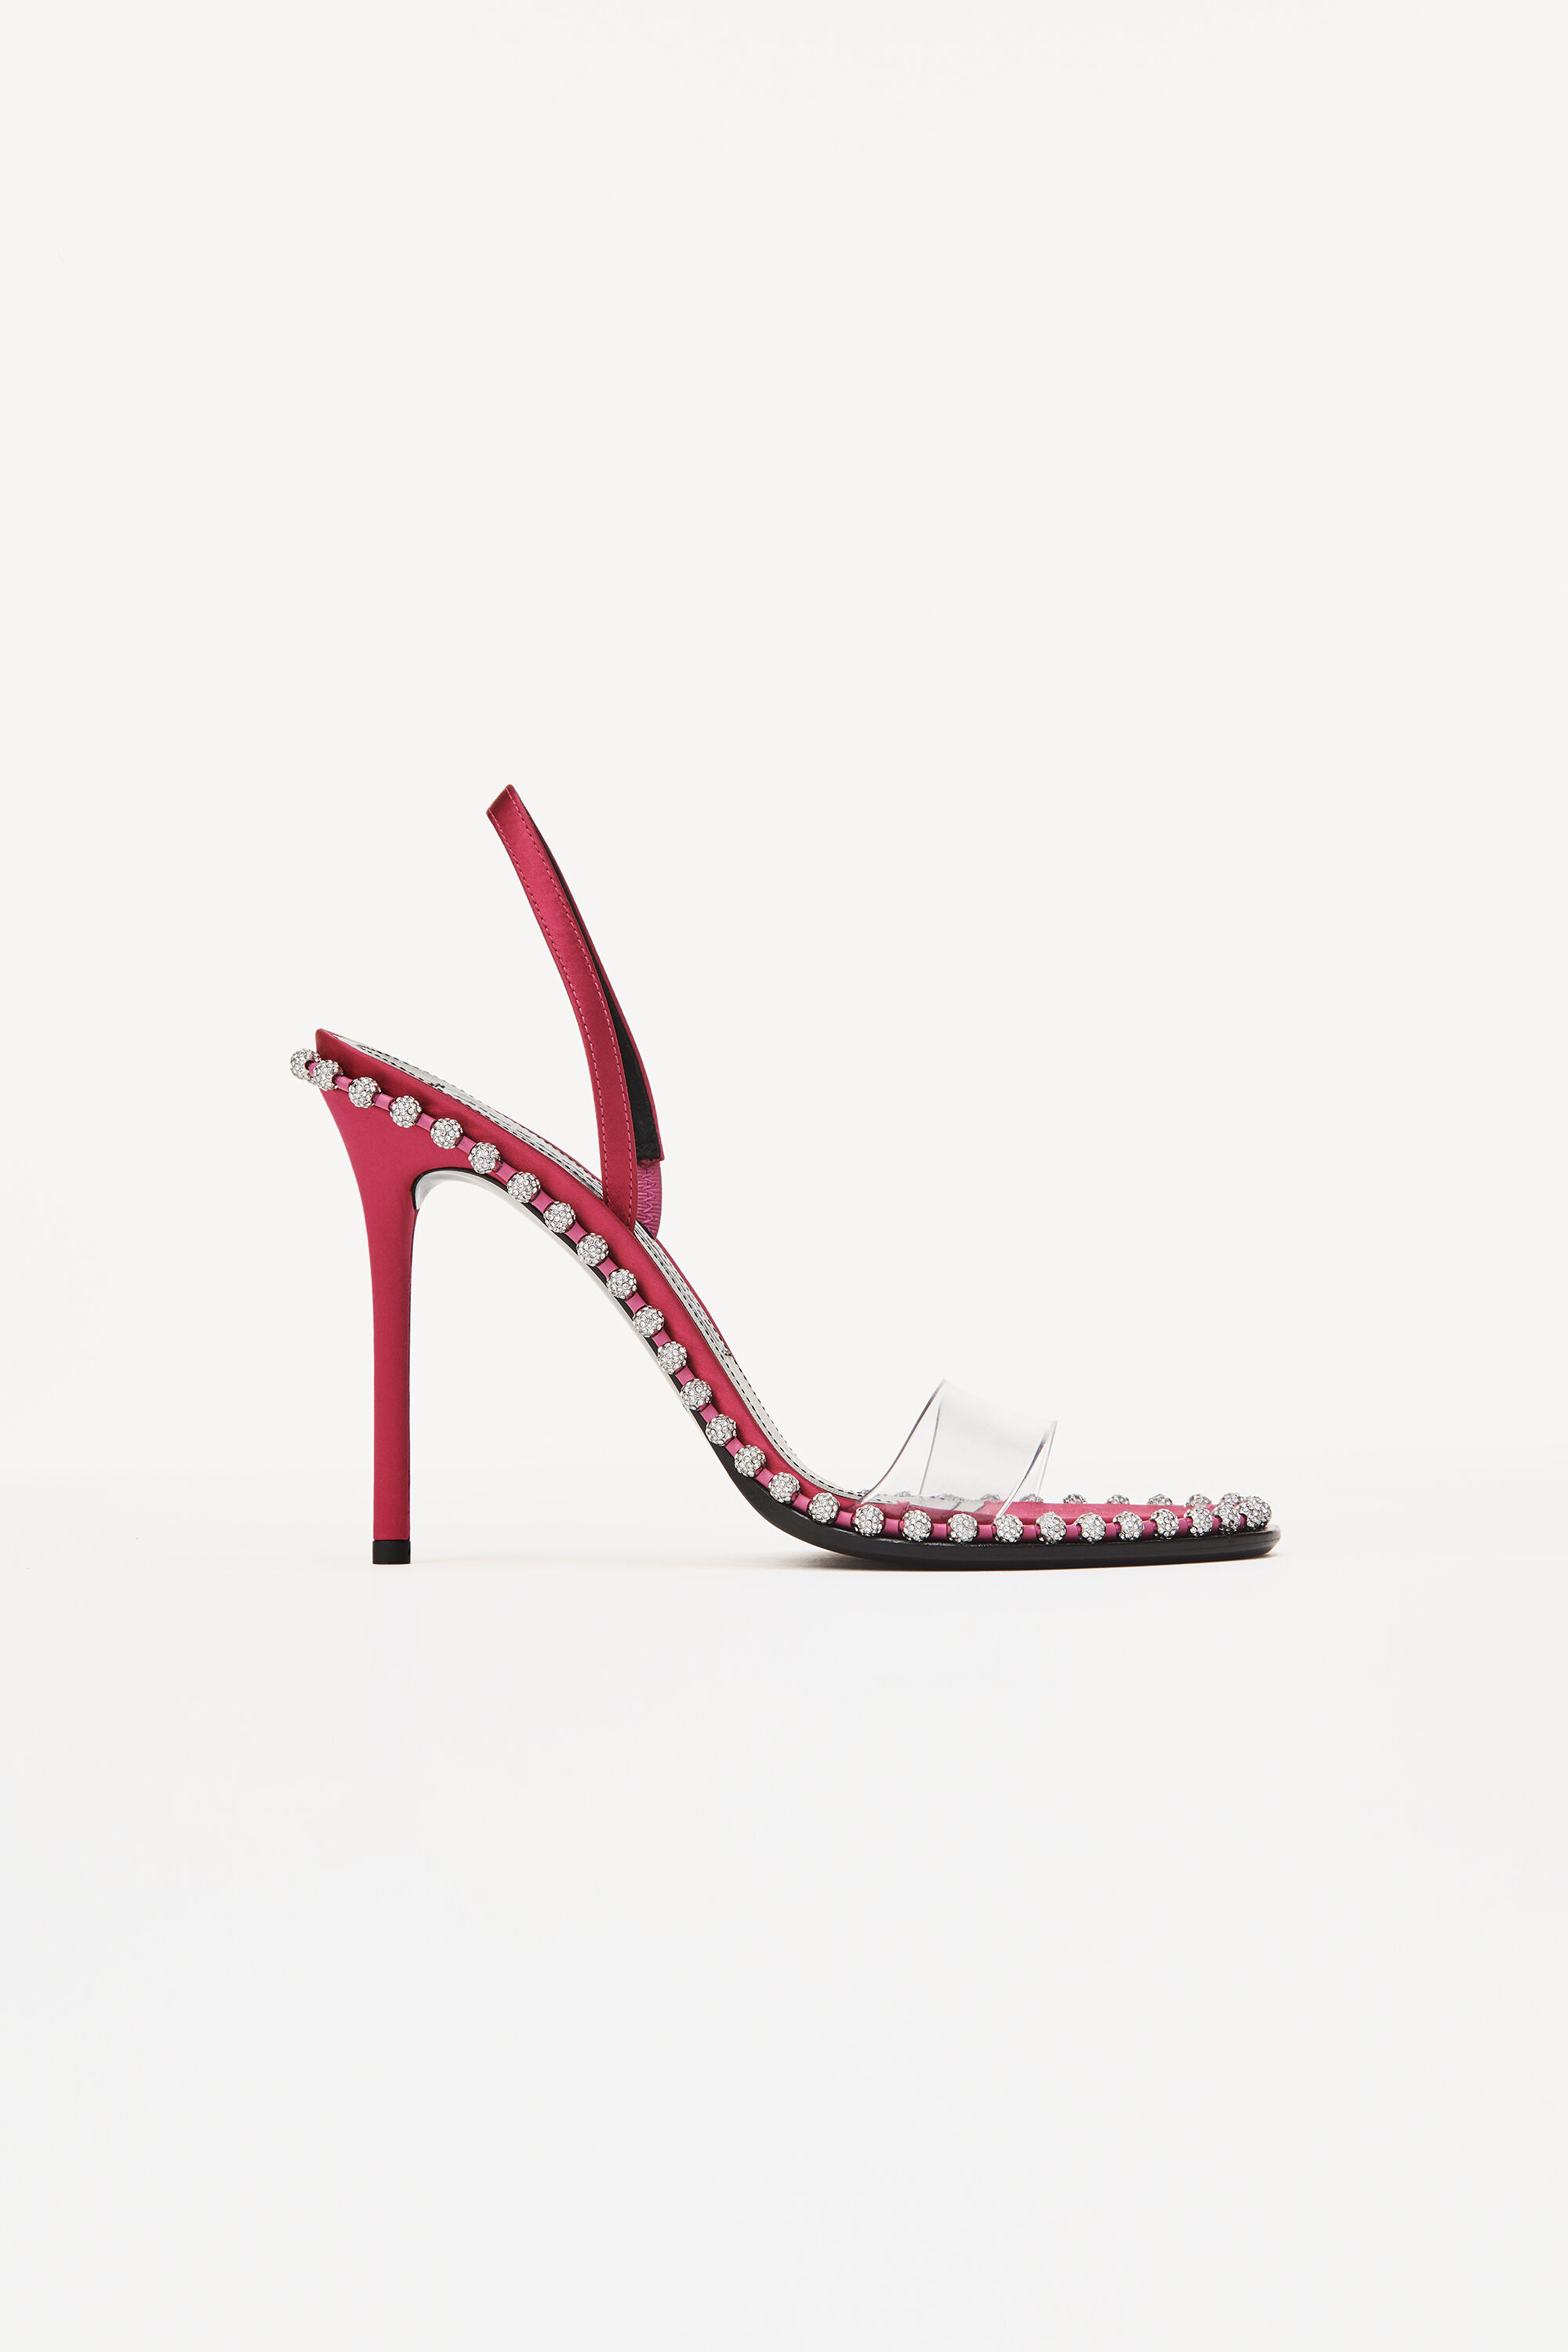 alexander wang red heels Online 